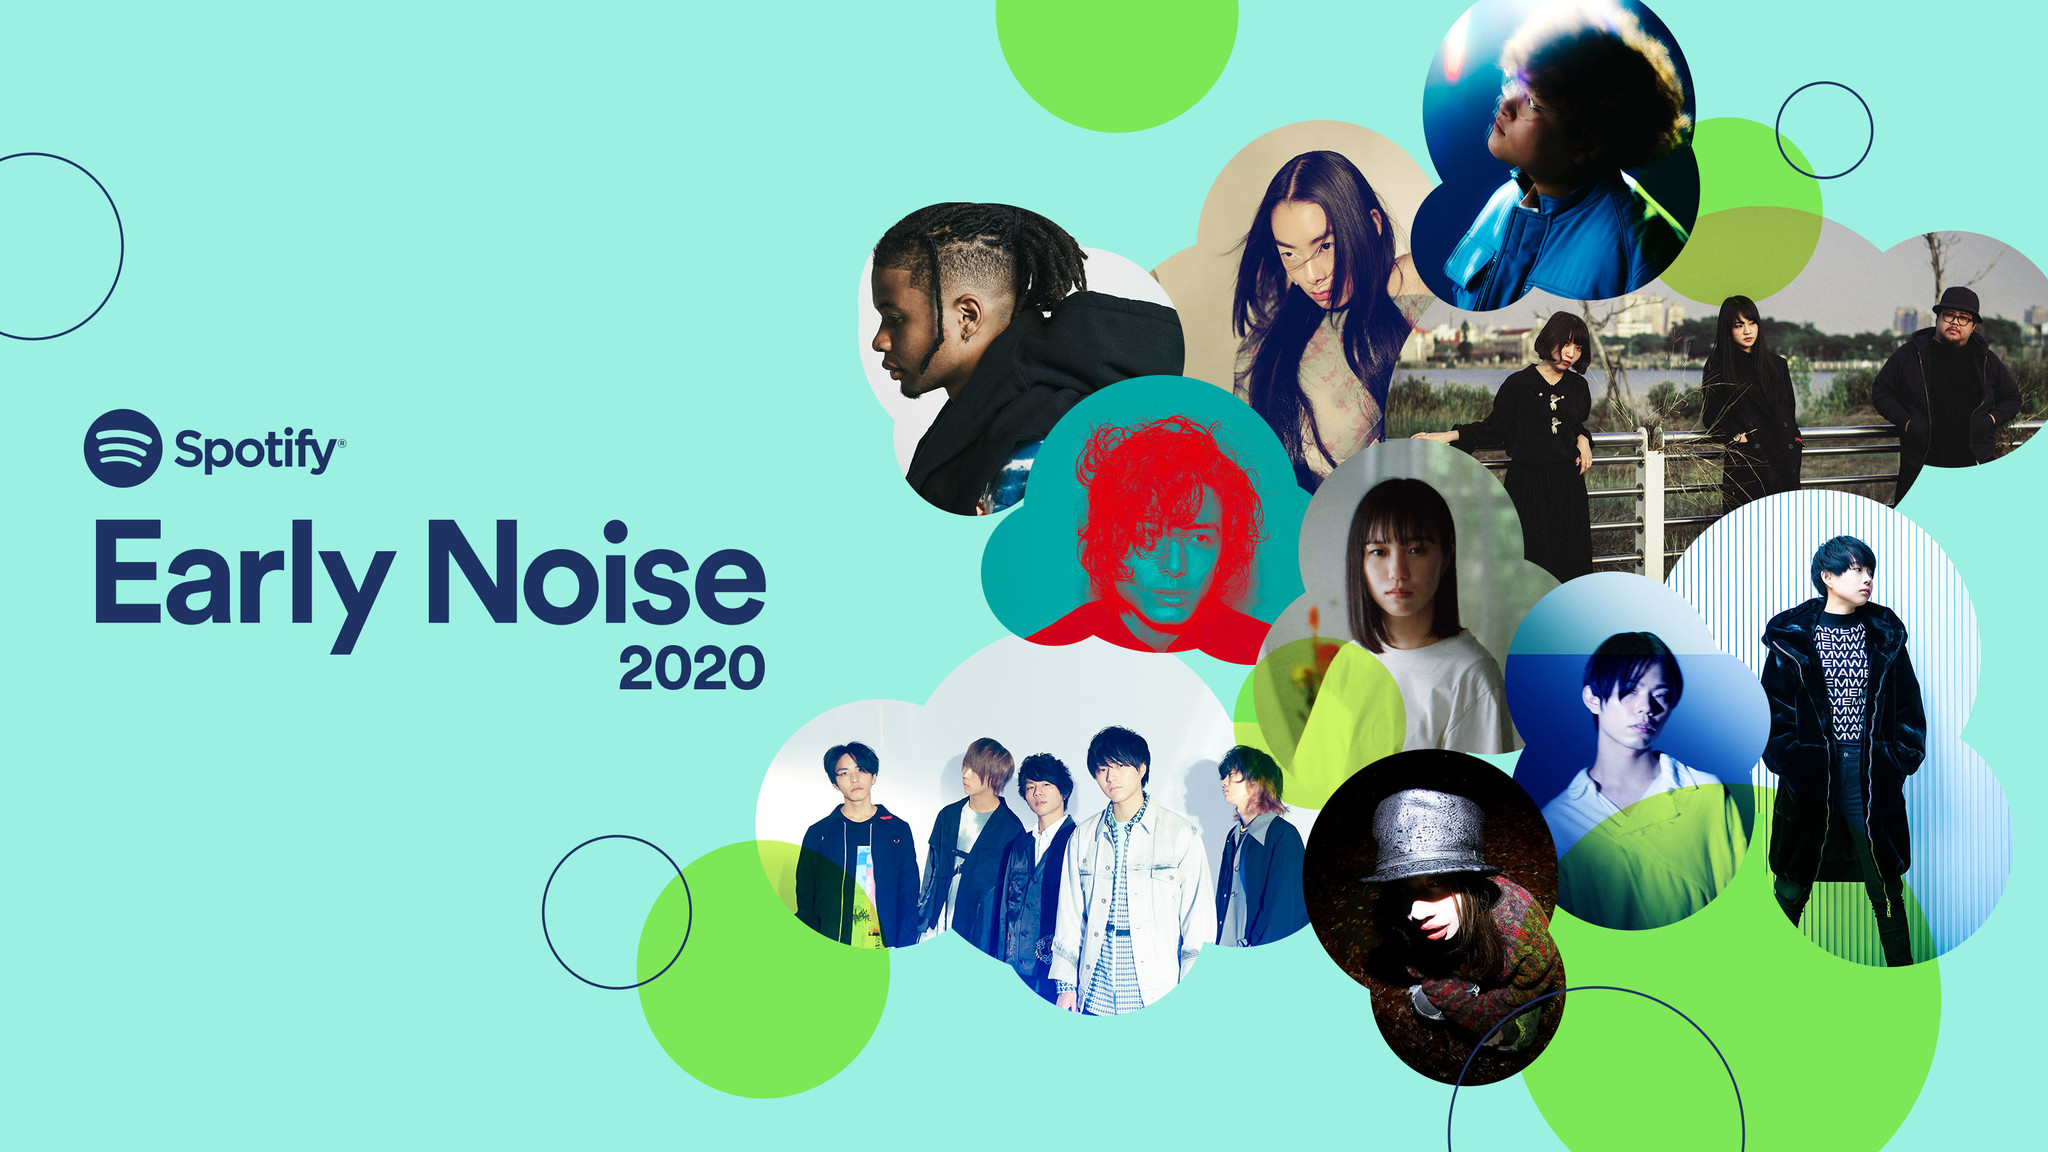 Spotifyが今年躍進を期待するネクストブレイクアーティスト Early Noise を発表 スポティファイジャパン株式会社のプレスリリース